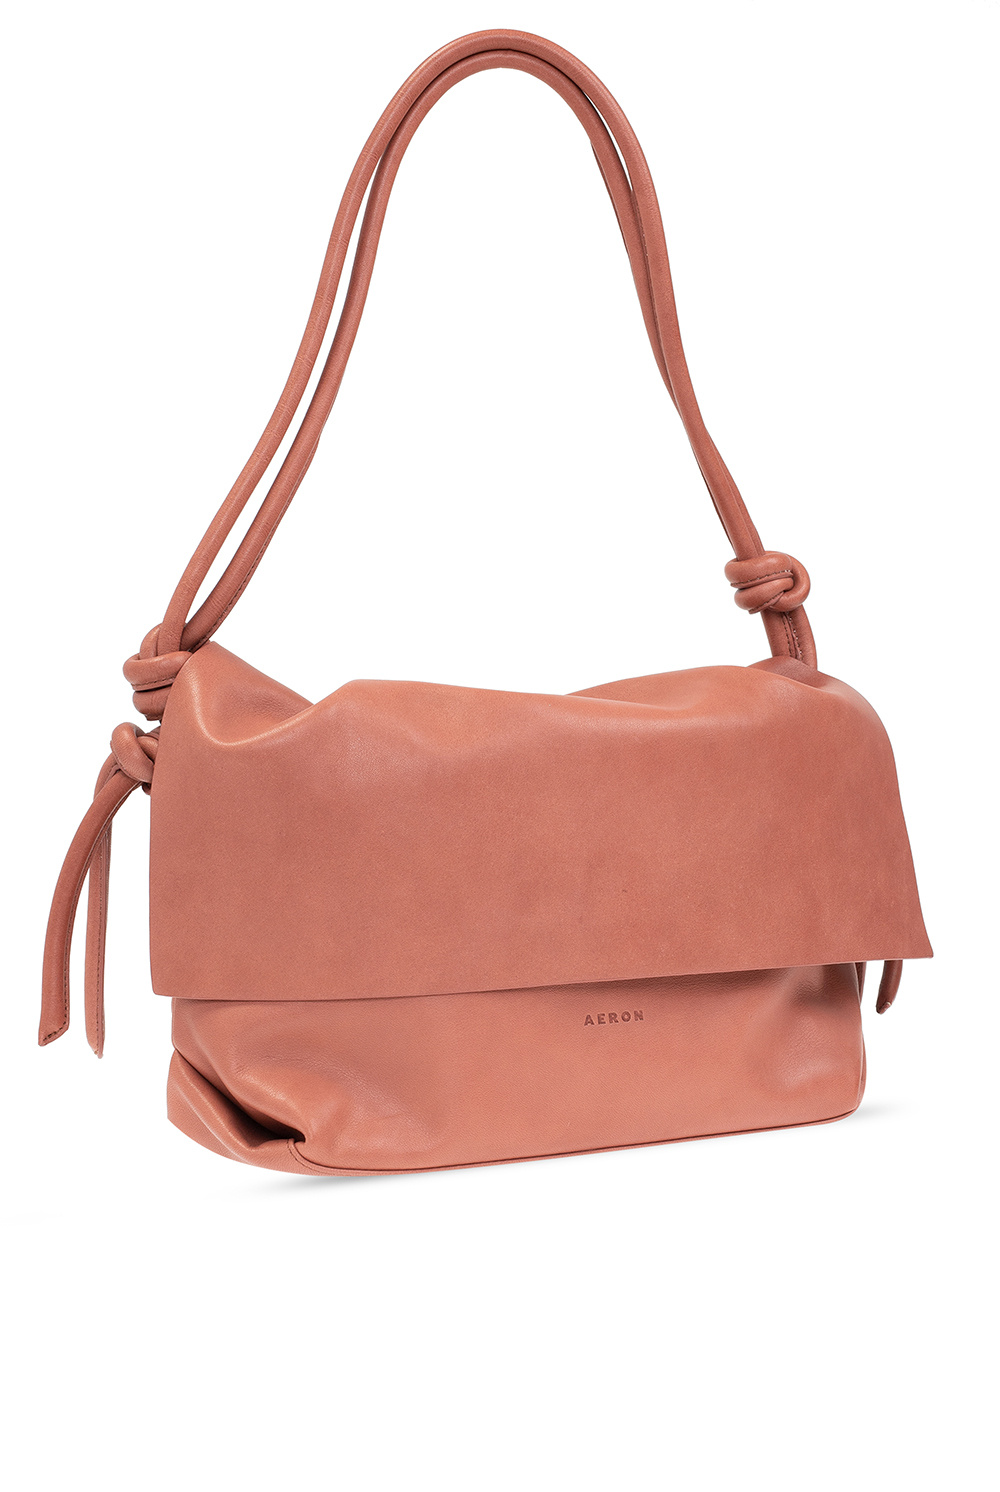 Aeron ‘Harriet Medium’ hobo shoulder mini bag